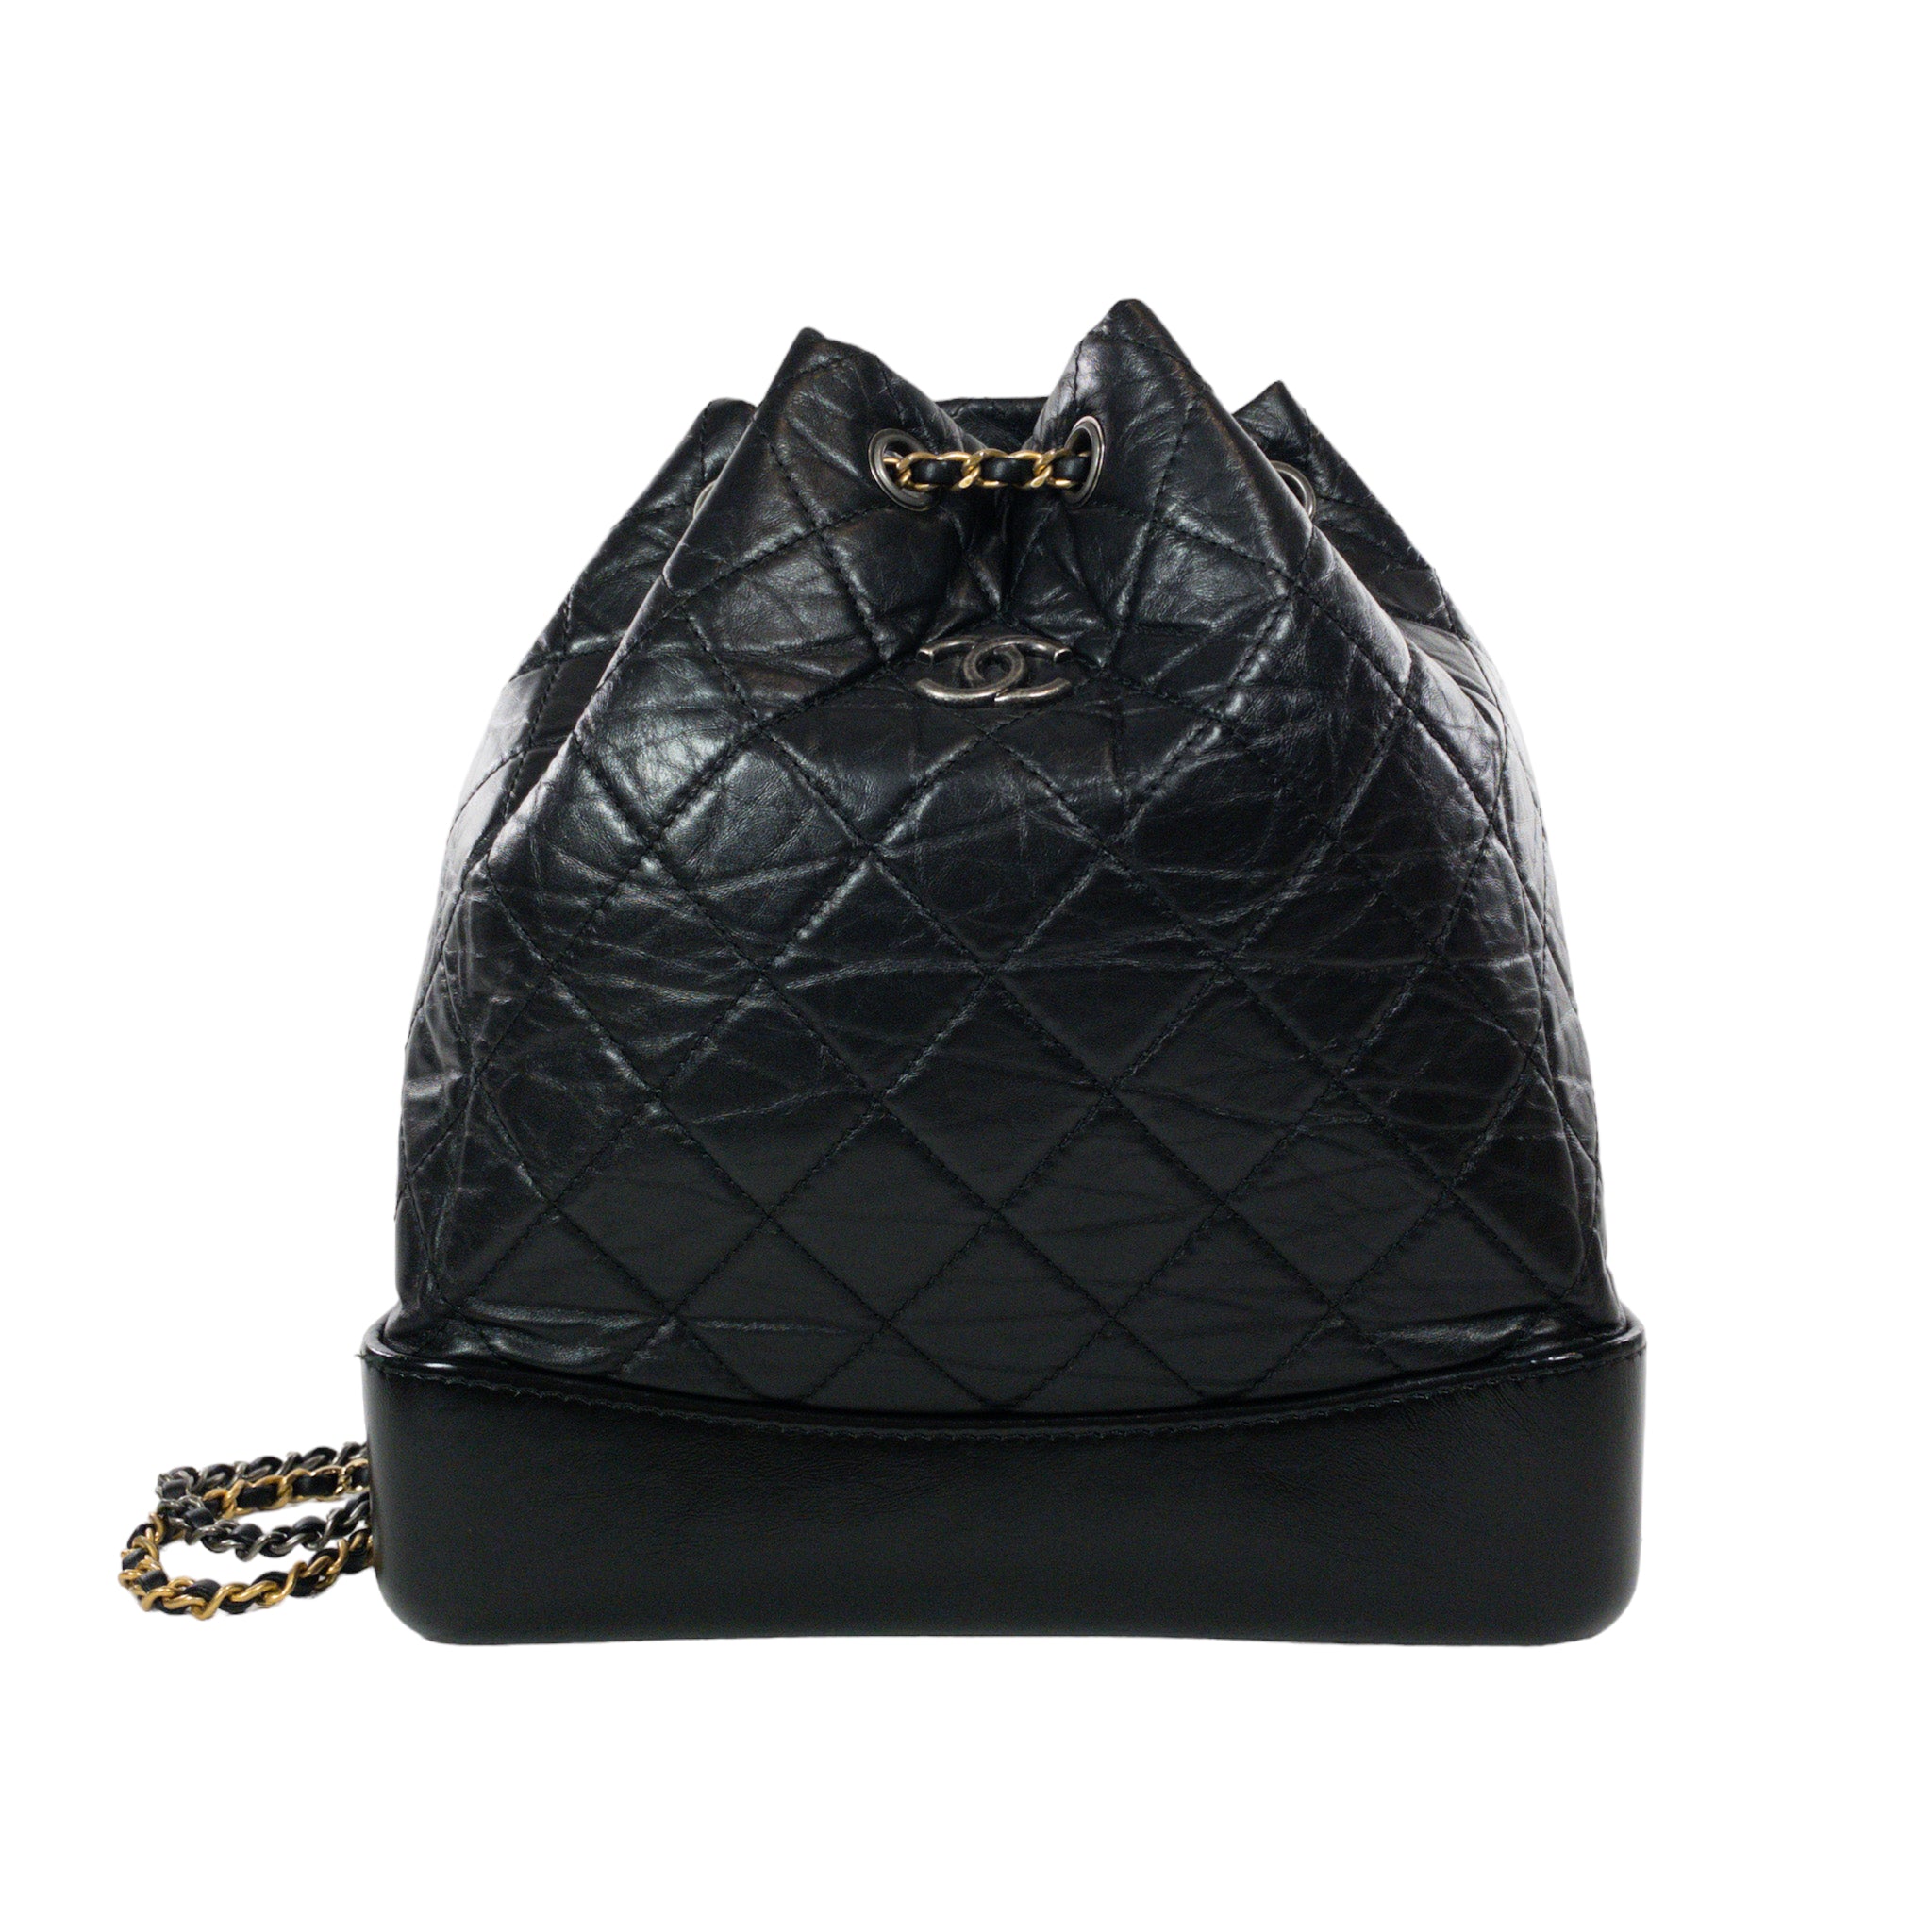 Chanel - Authenticated Gabrielle Handbag - Leather Black Plain for Women, Good Condition